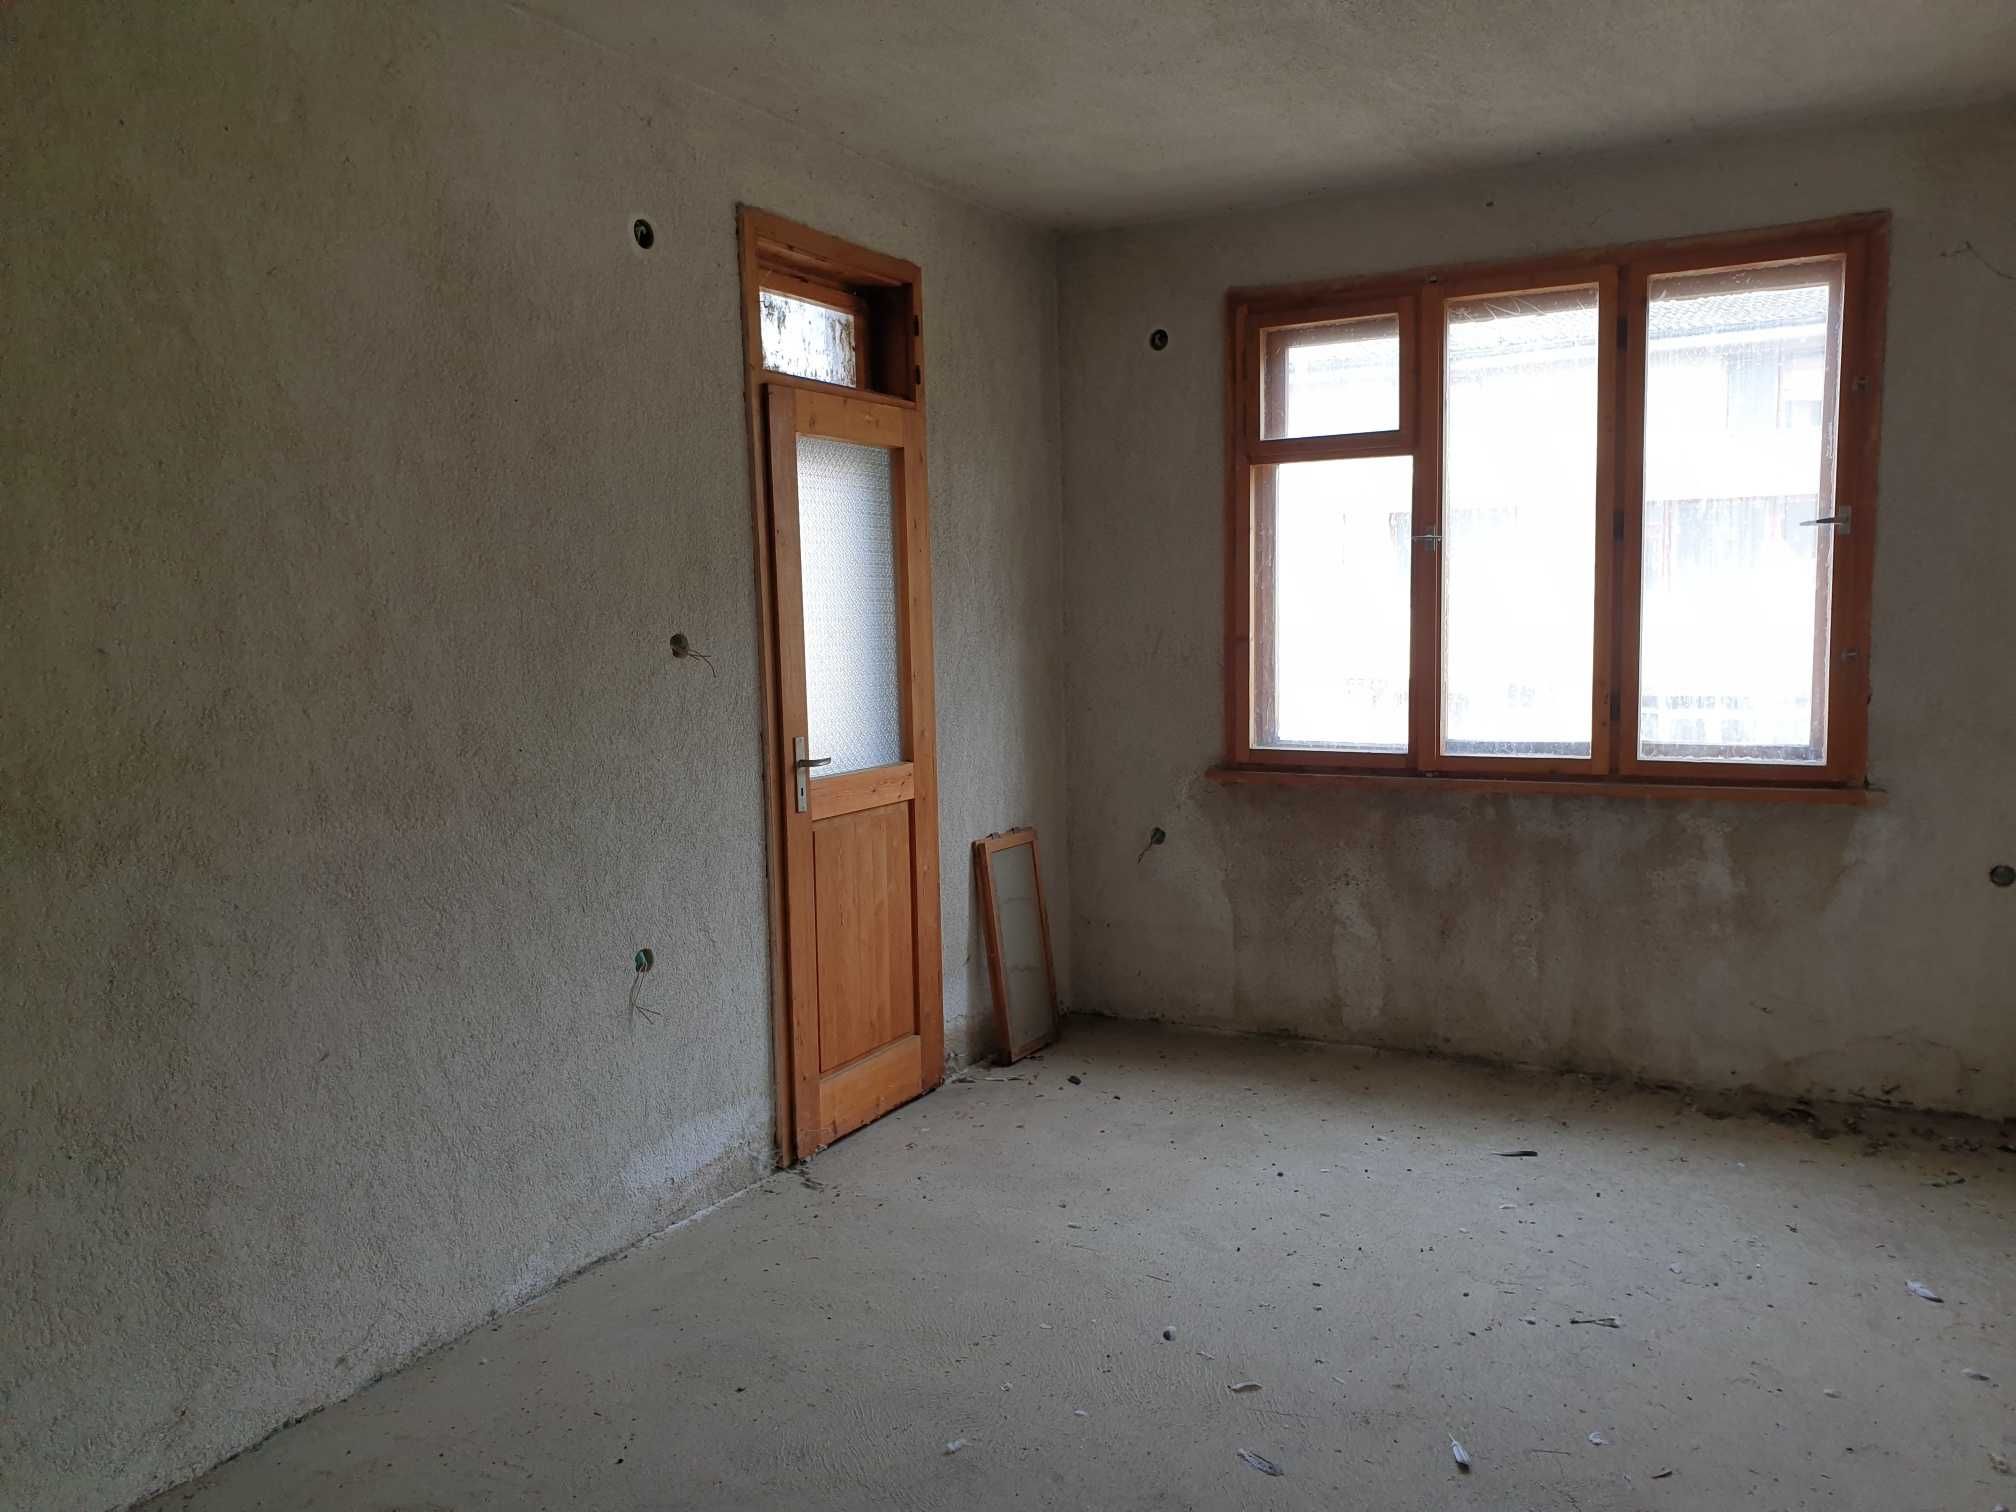 Продава се:Многостаен апартамент 150 кв.м.,ет.4,с гараж, в гр. Карлово